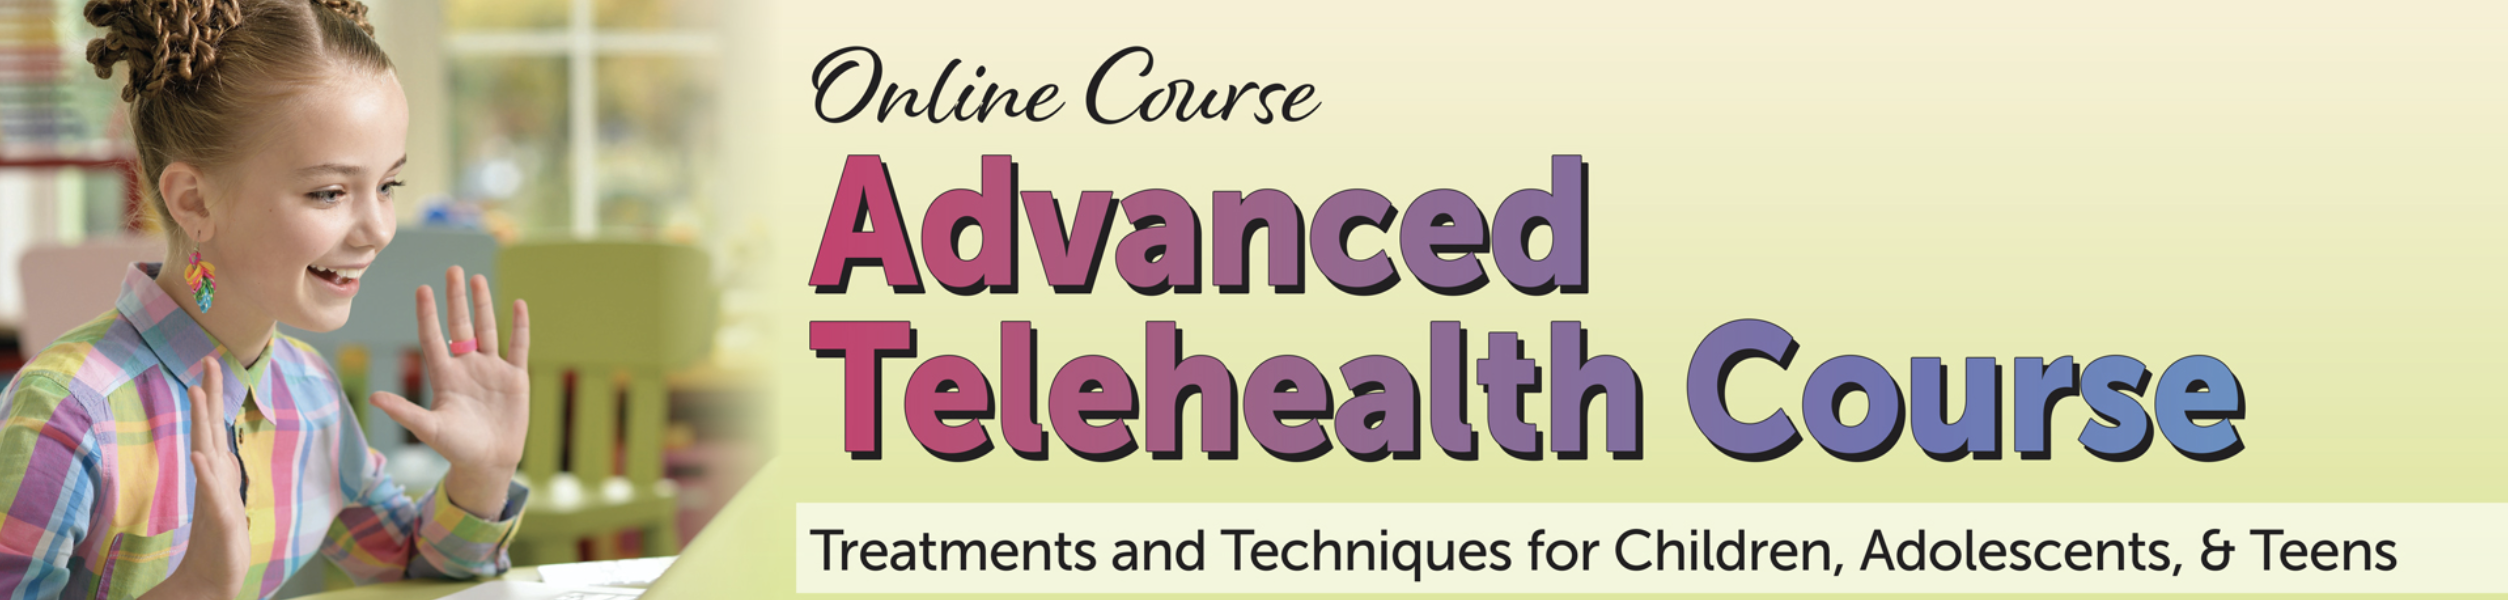 Advanced Telehealth Online Course